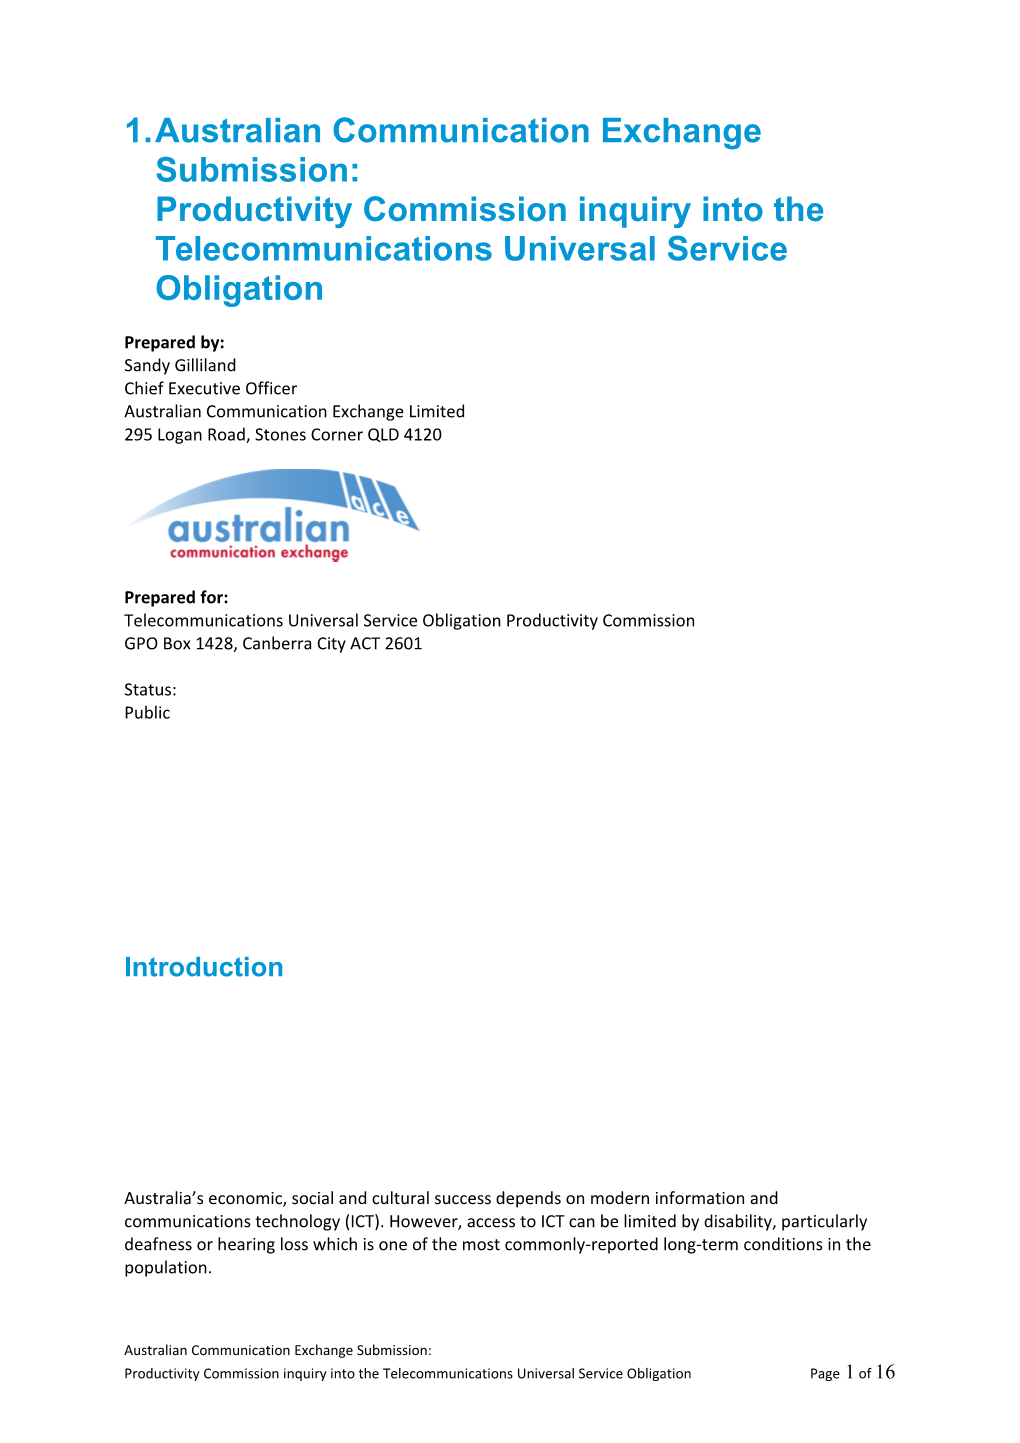 Submission 22 - Australian Communications Exchange (ACE) - Telecommunications Universal